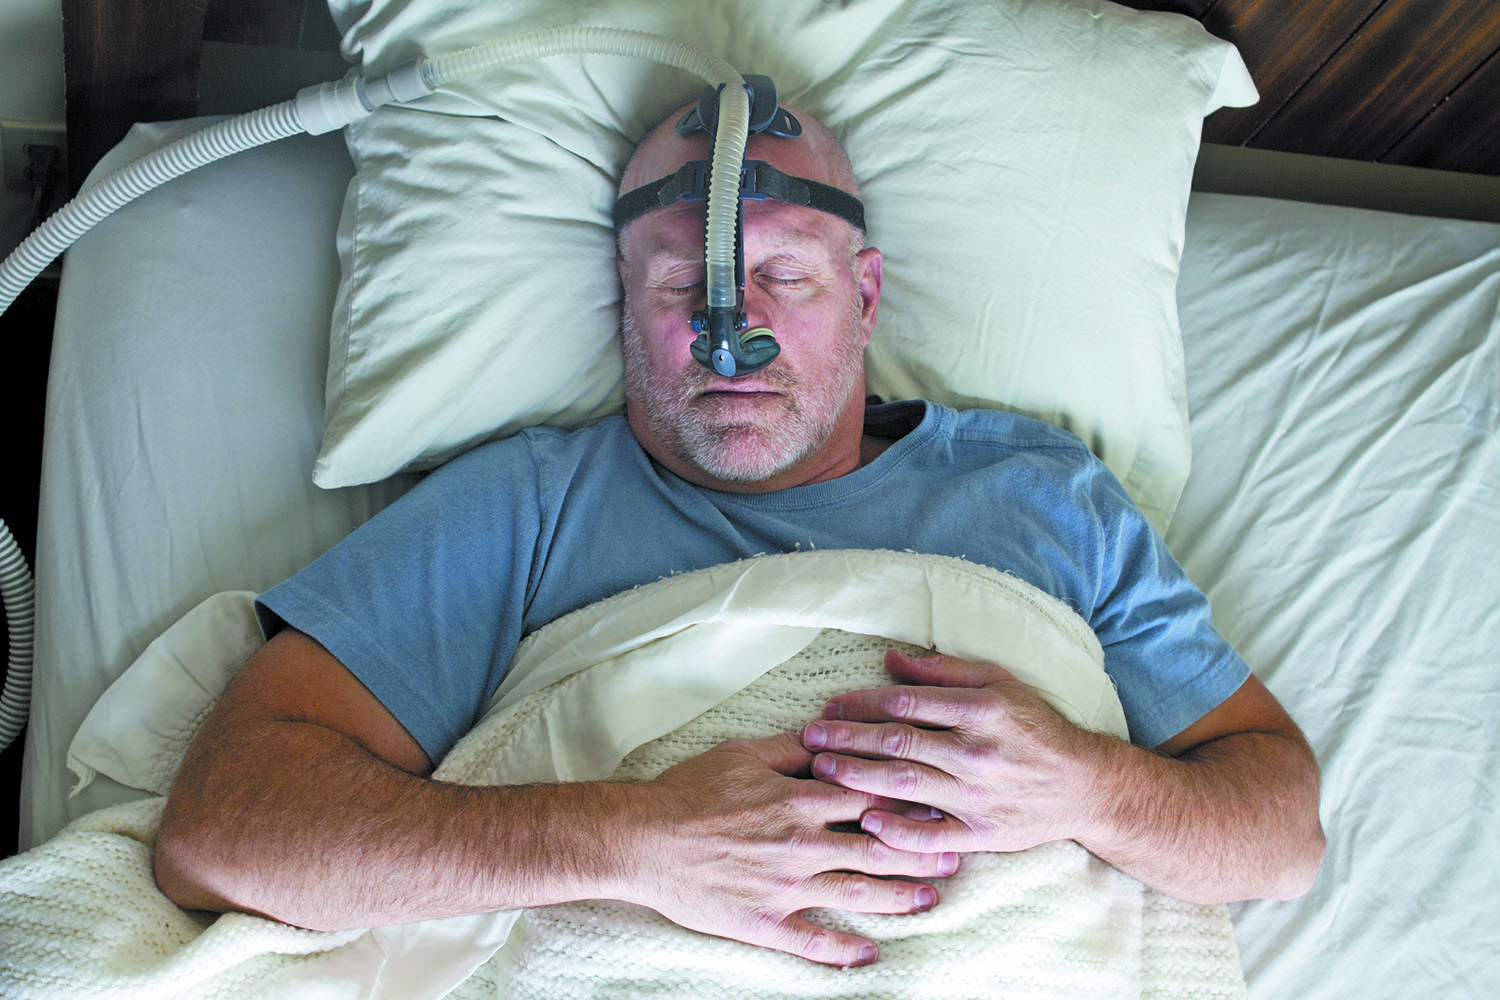 The hazard of uncontrolled sleep apnea